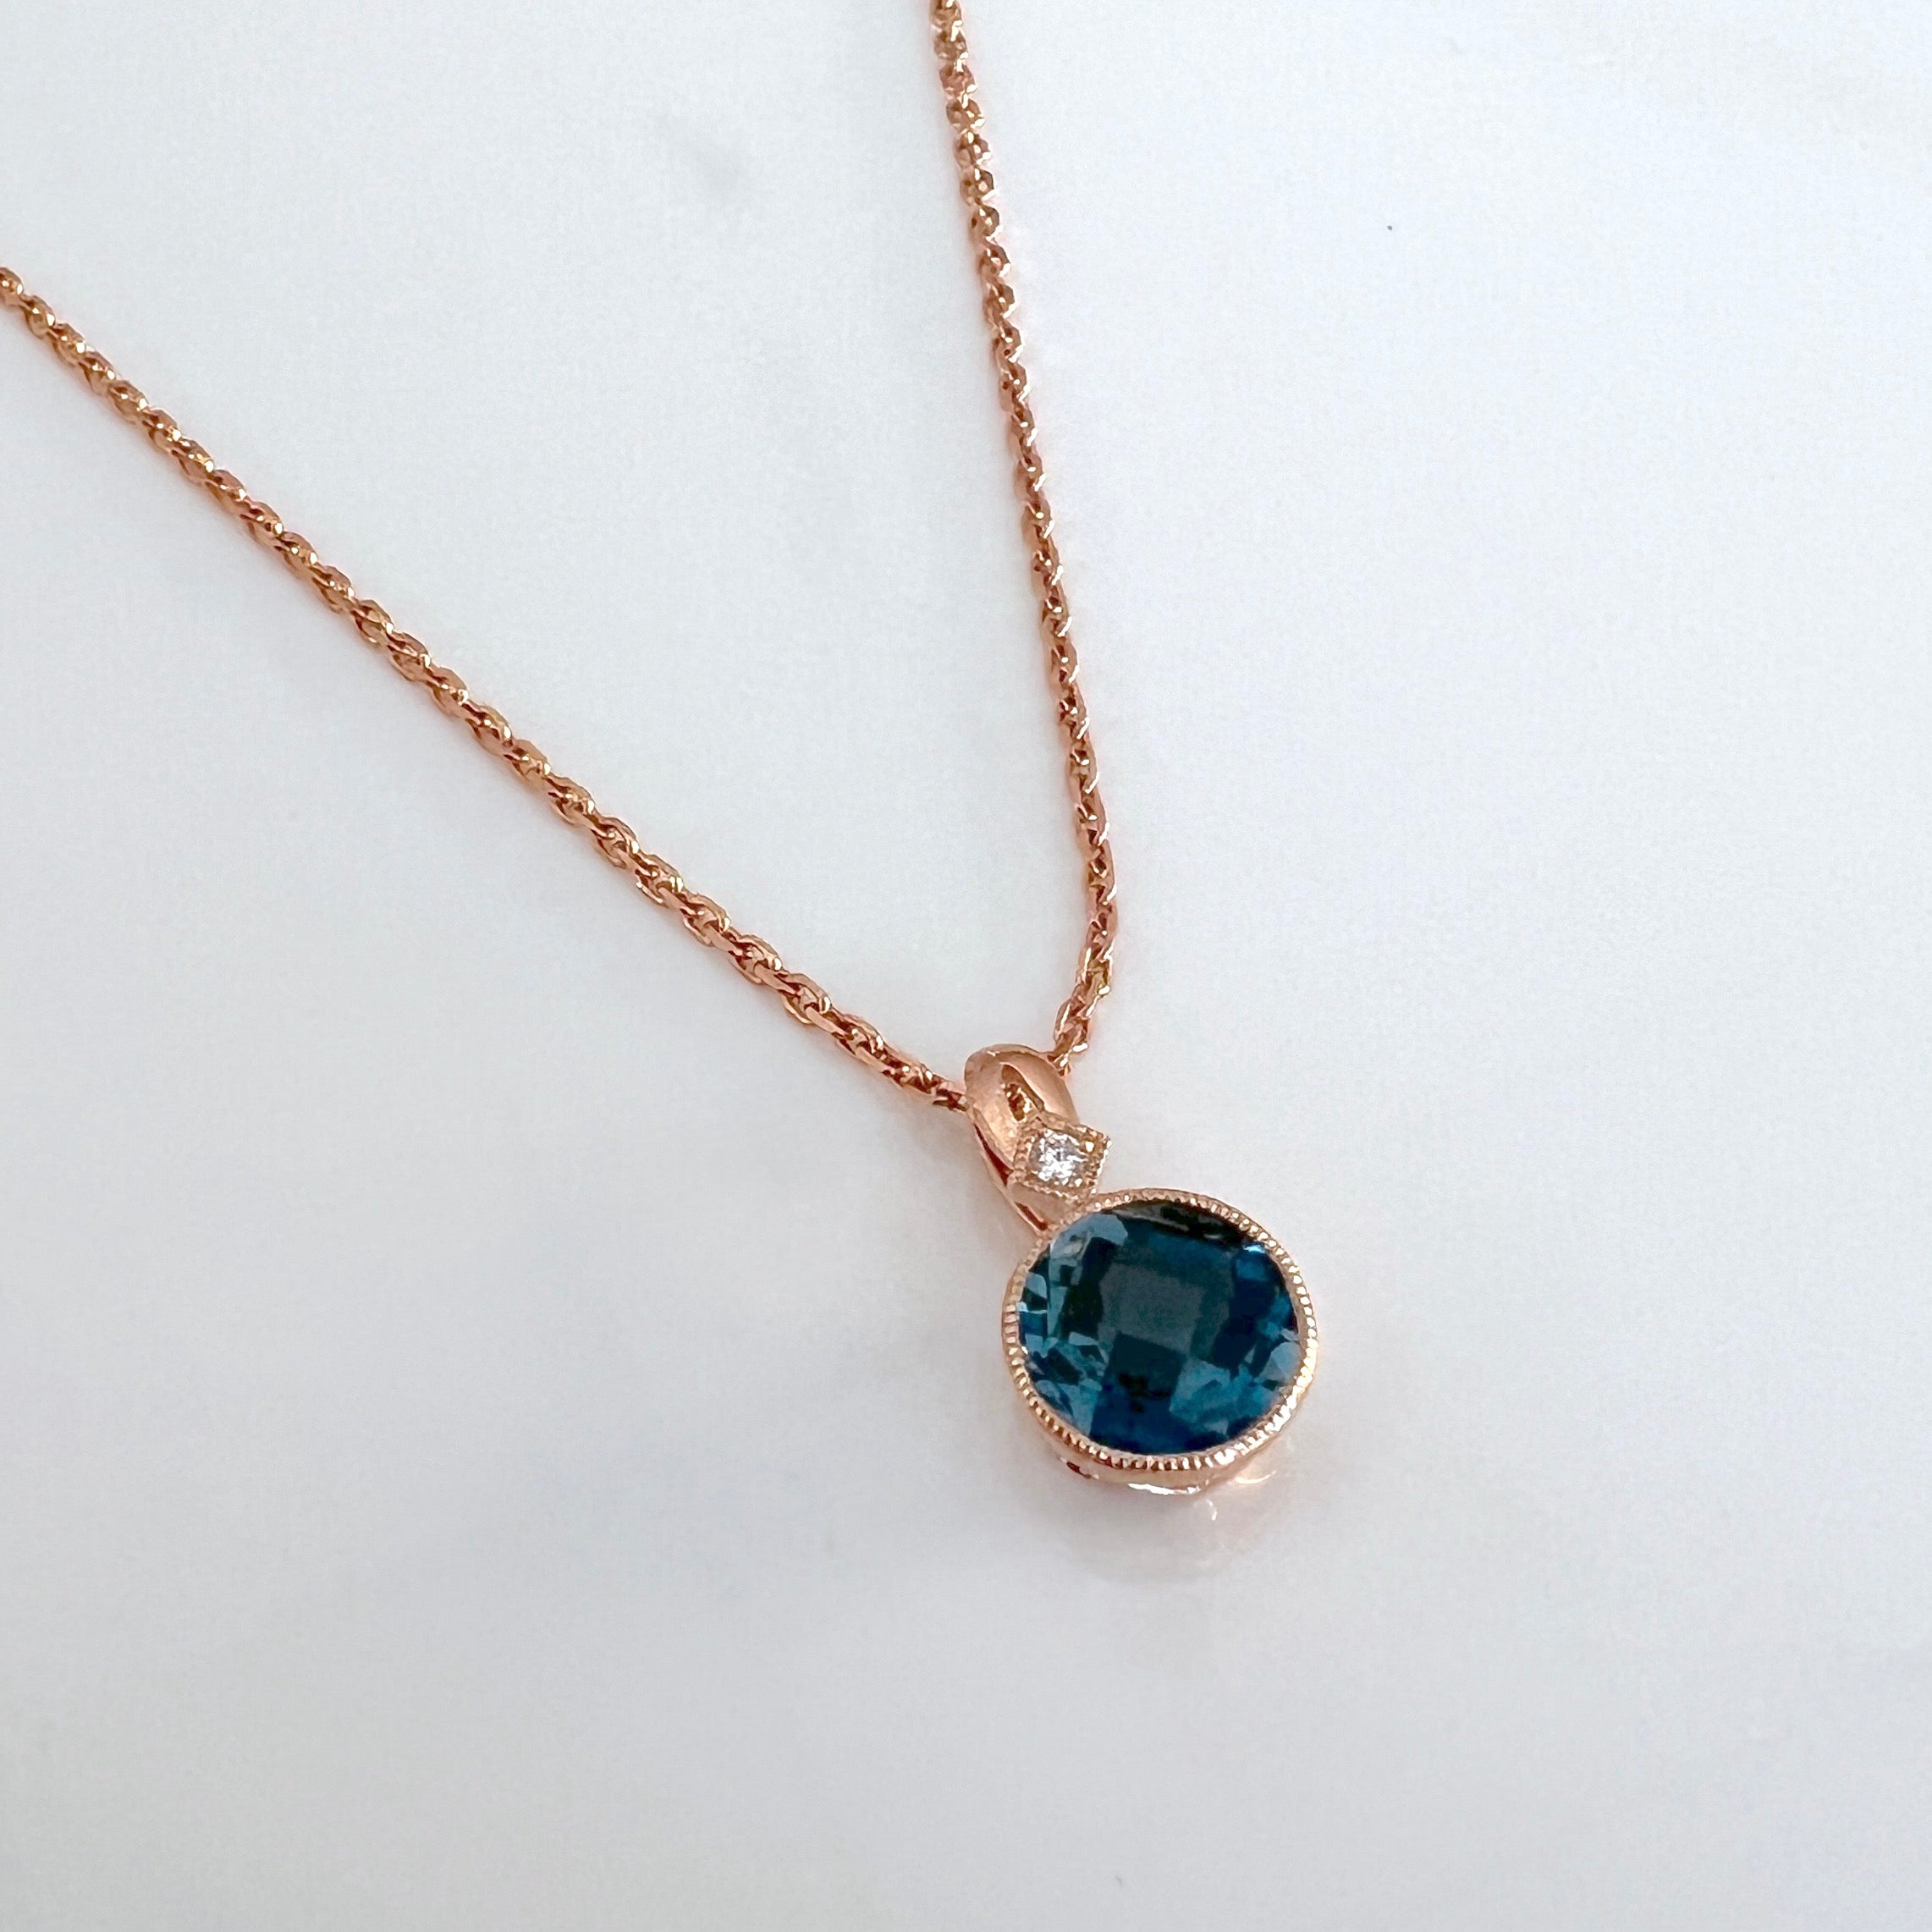 Buy London Blue Topaz Necklace in 18K Gold, Gift for Her Blue Gem Gold  Necklace Online in India - Etsy